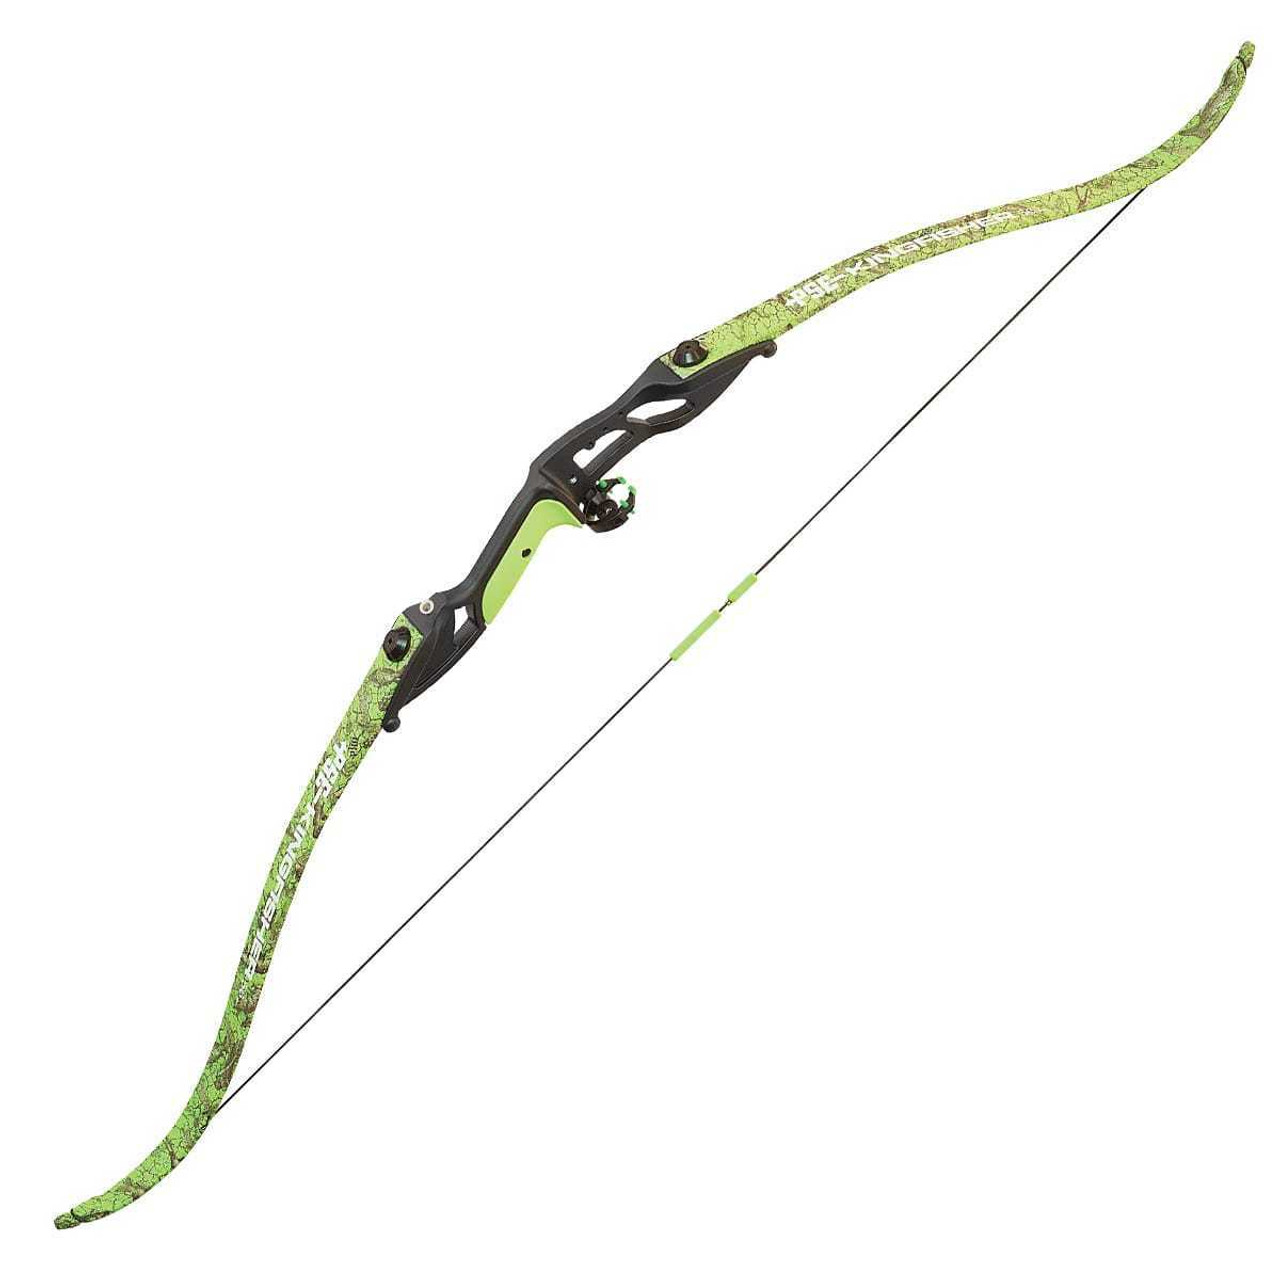 PSE ARCHERY The Kingfisher-Arrows-Kit-Fish - 56-40 - Mike's Archery